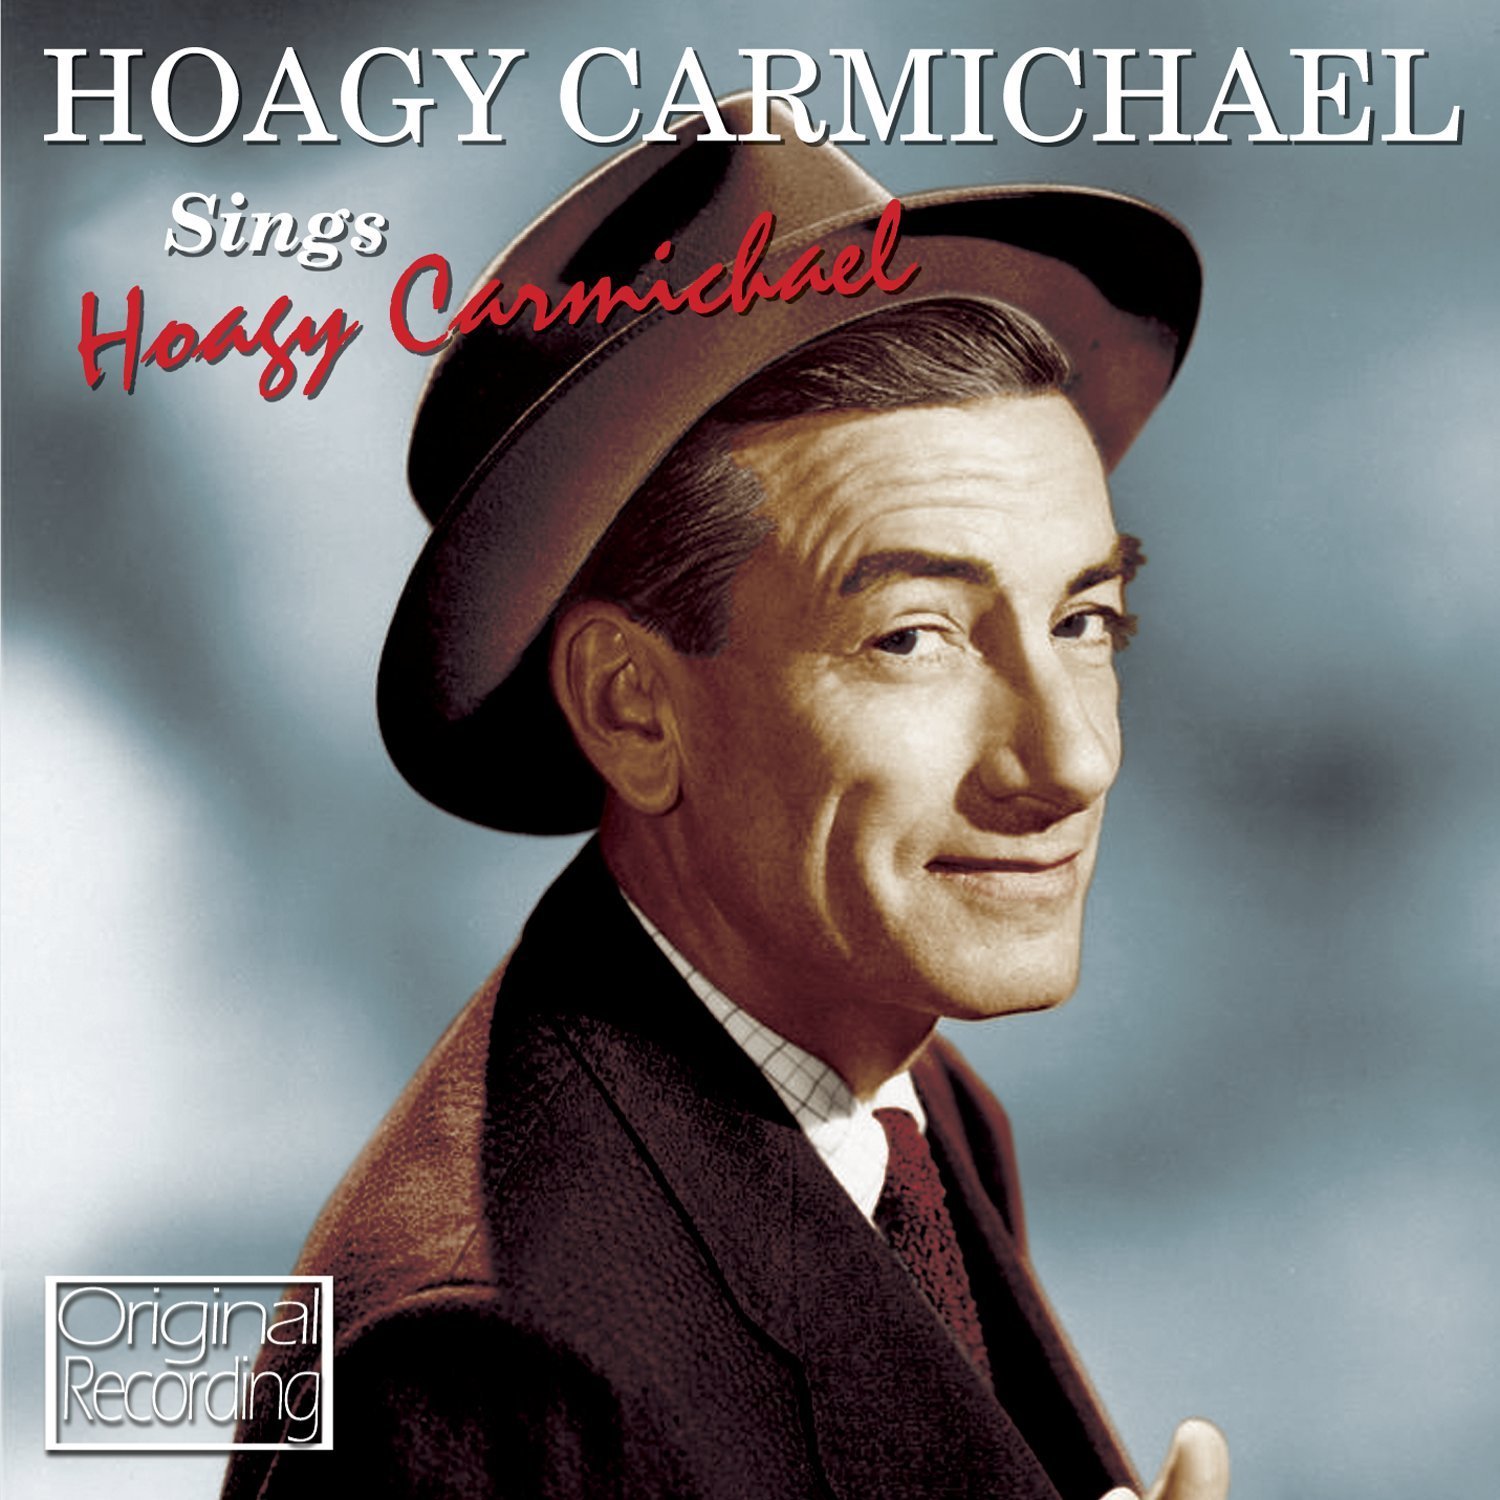 images-of-hoagy-carmichael